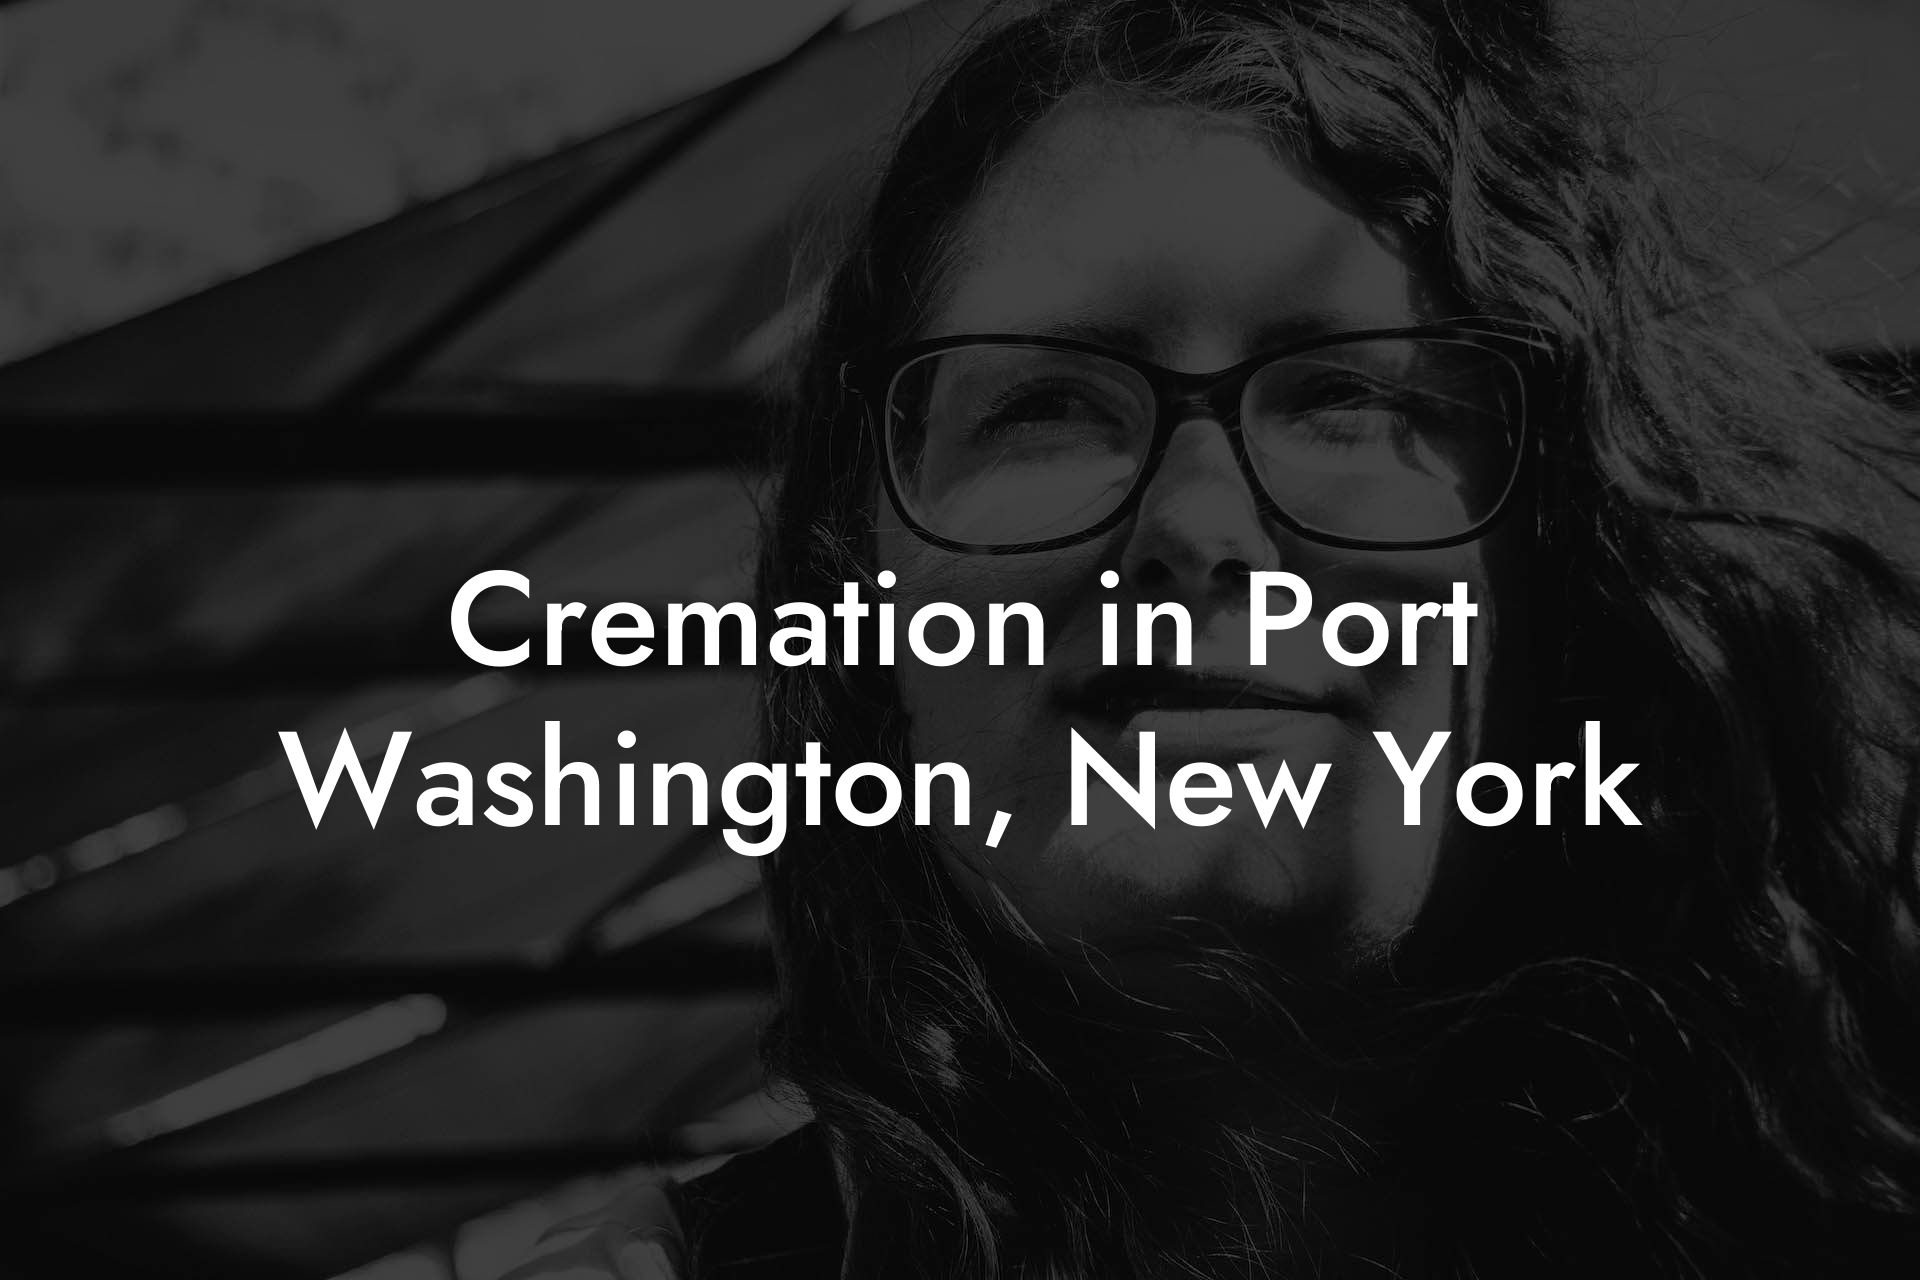 Cremation in Port Washington, New York